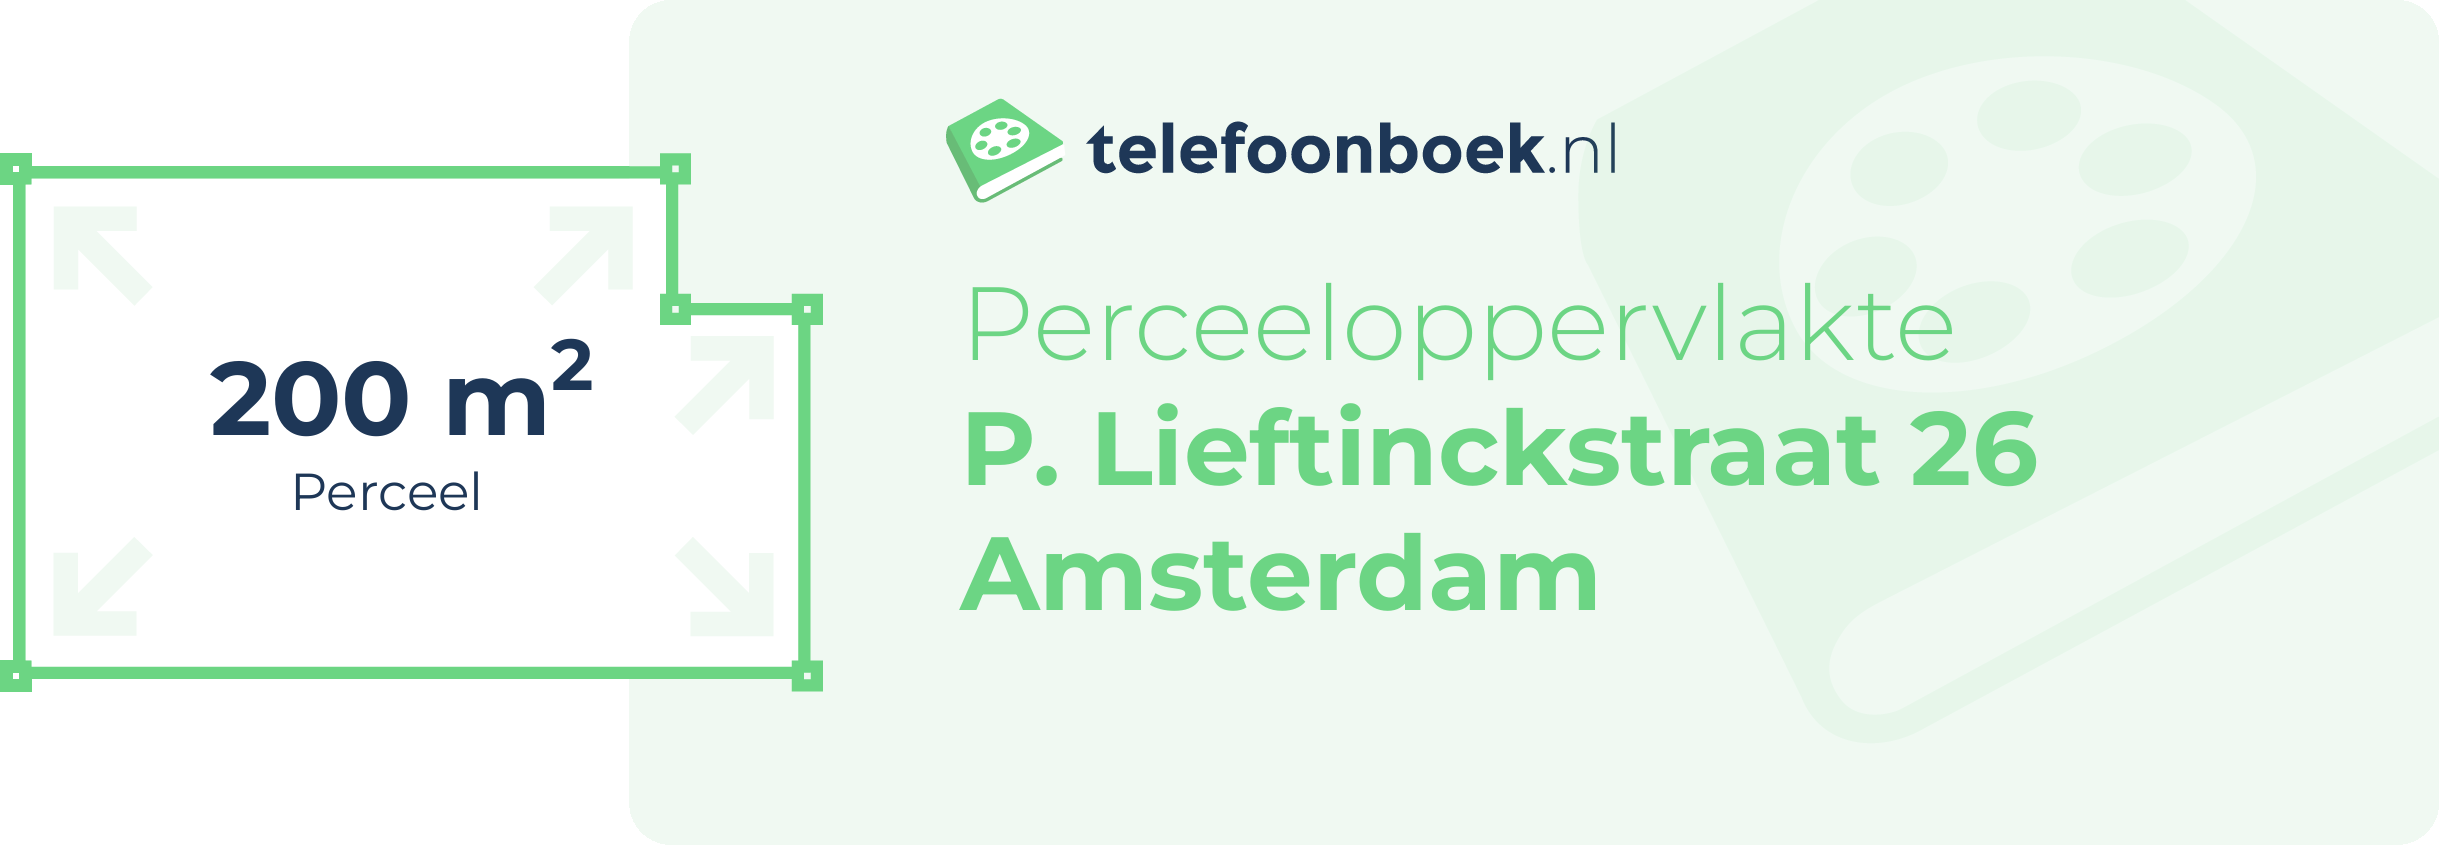 Perceeloppervlakte P. Lieftinckstraat 26 Amsterdam